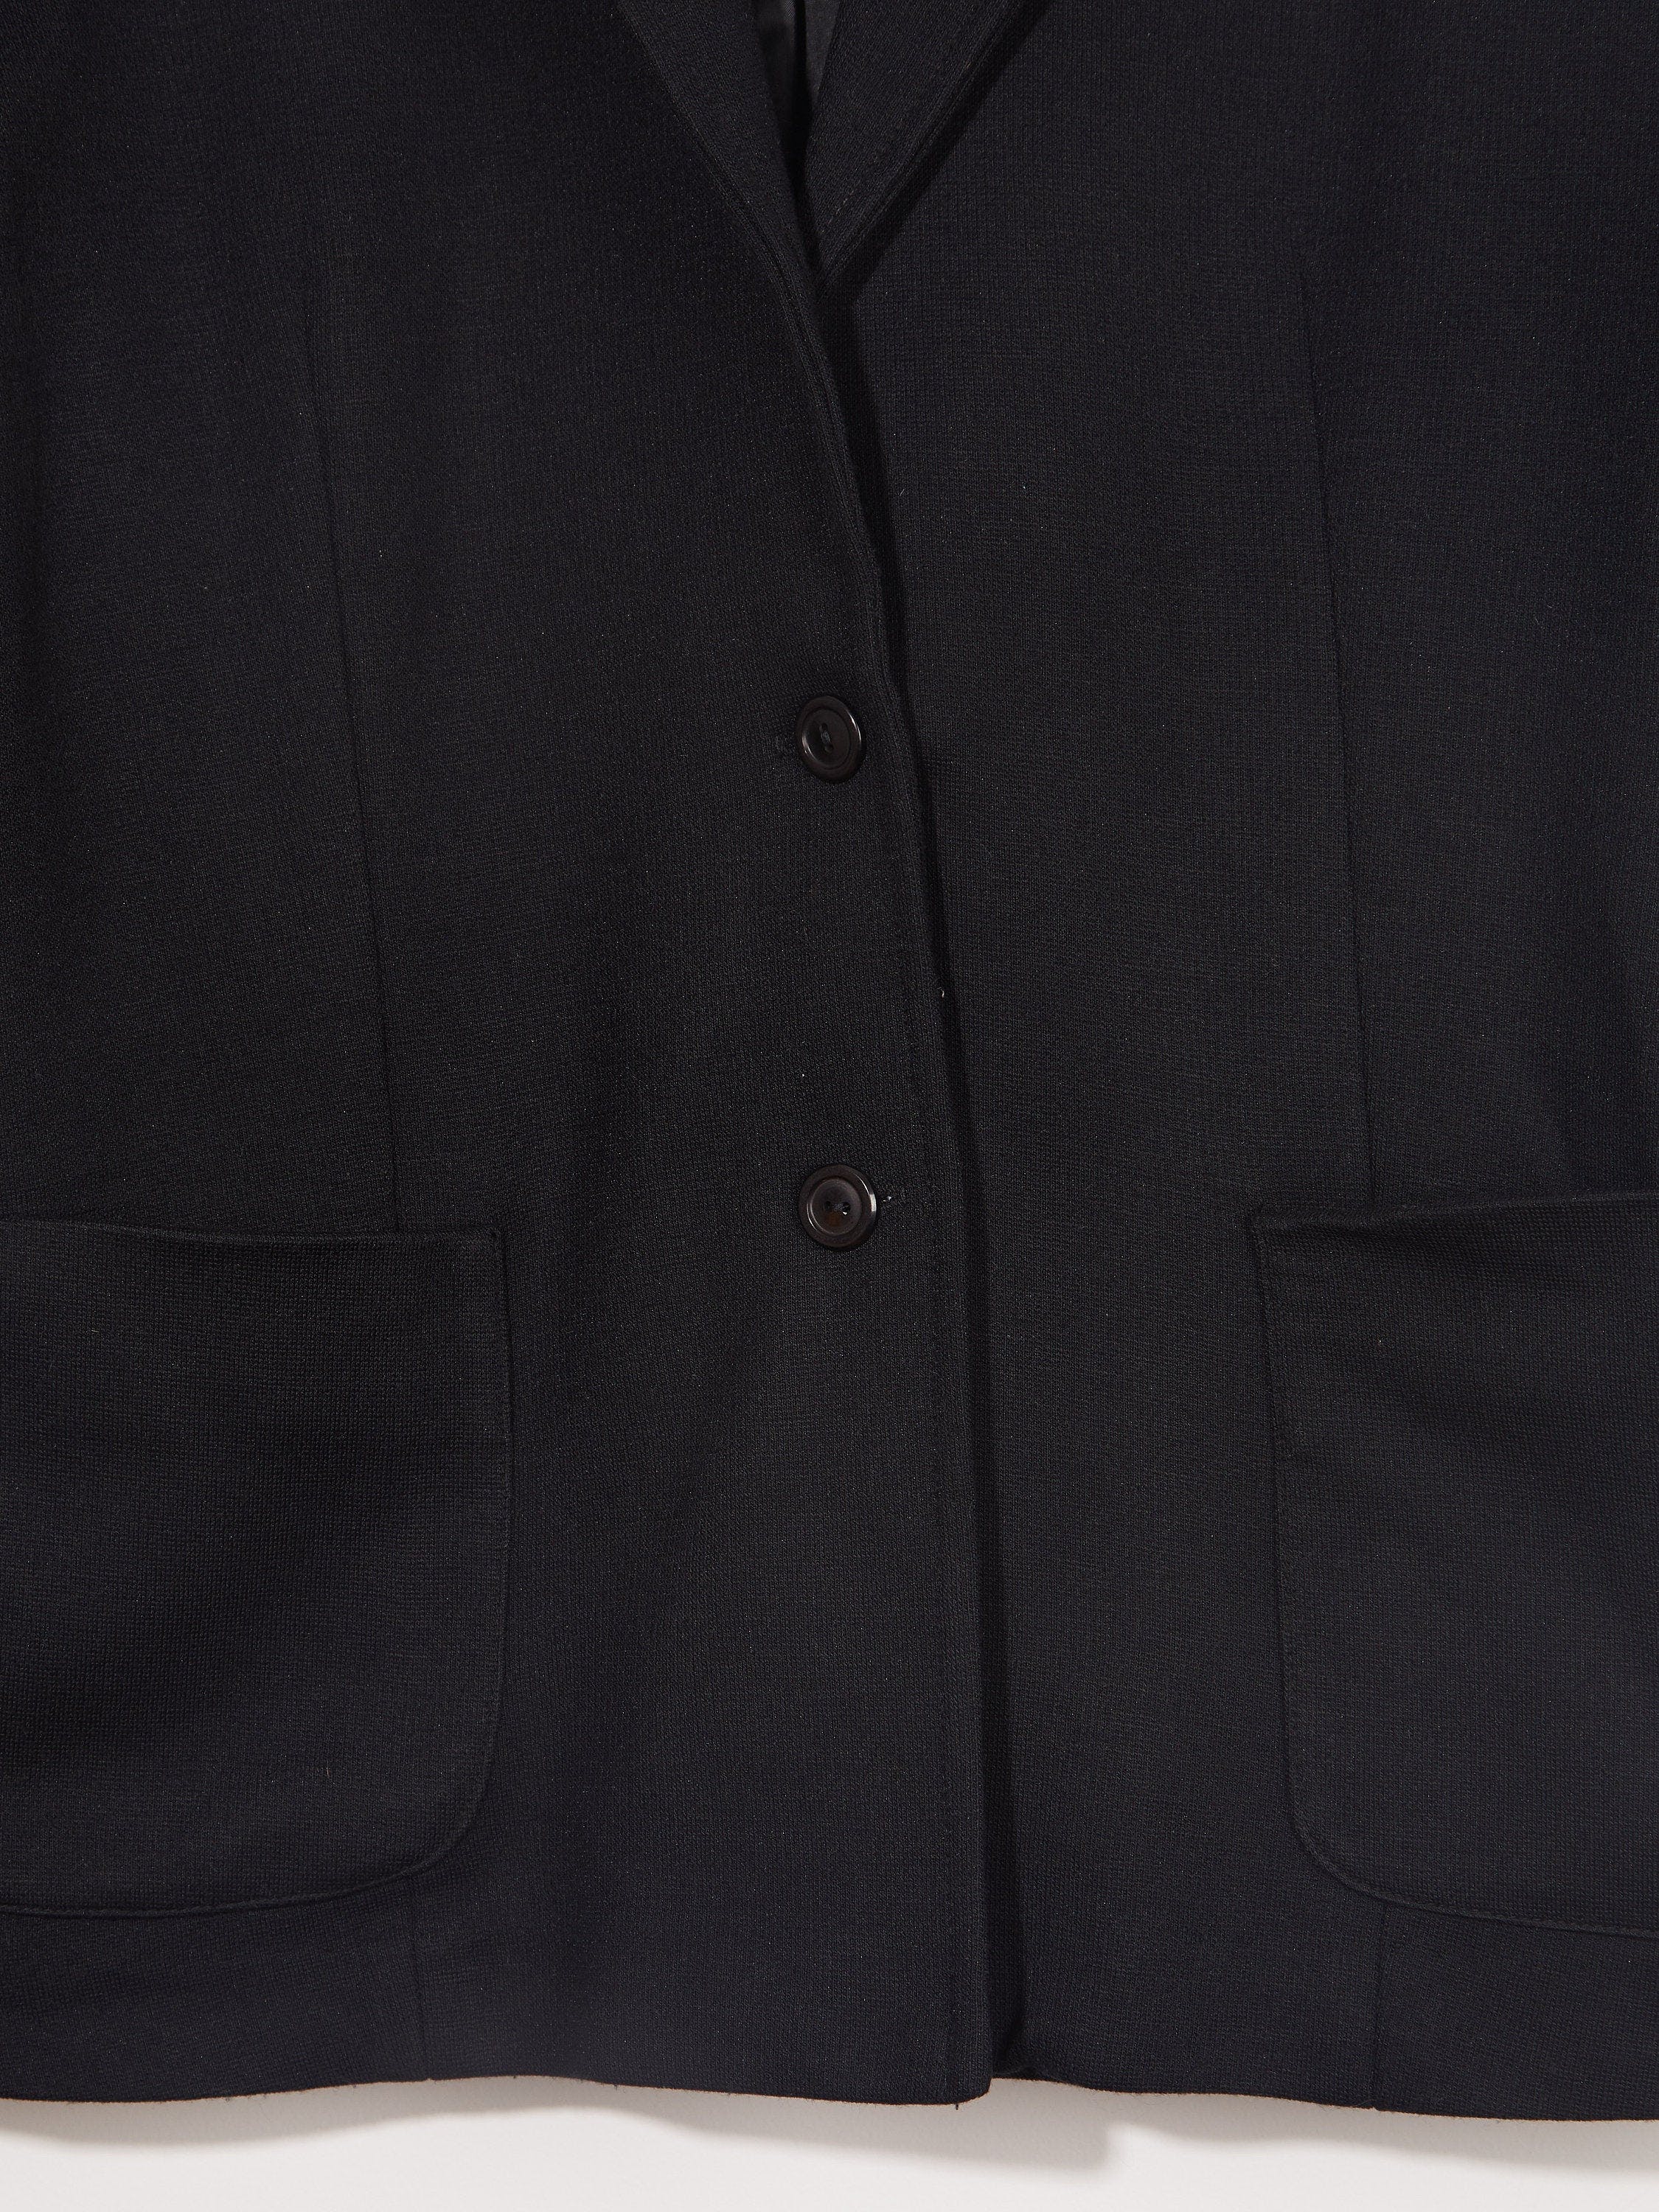 Vintage 70's/80's Black Blazer with Pockets by Alex Colman | Shop THRILLING